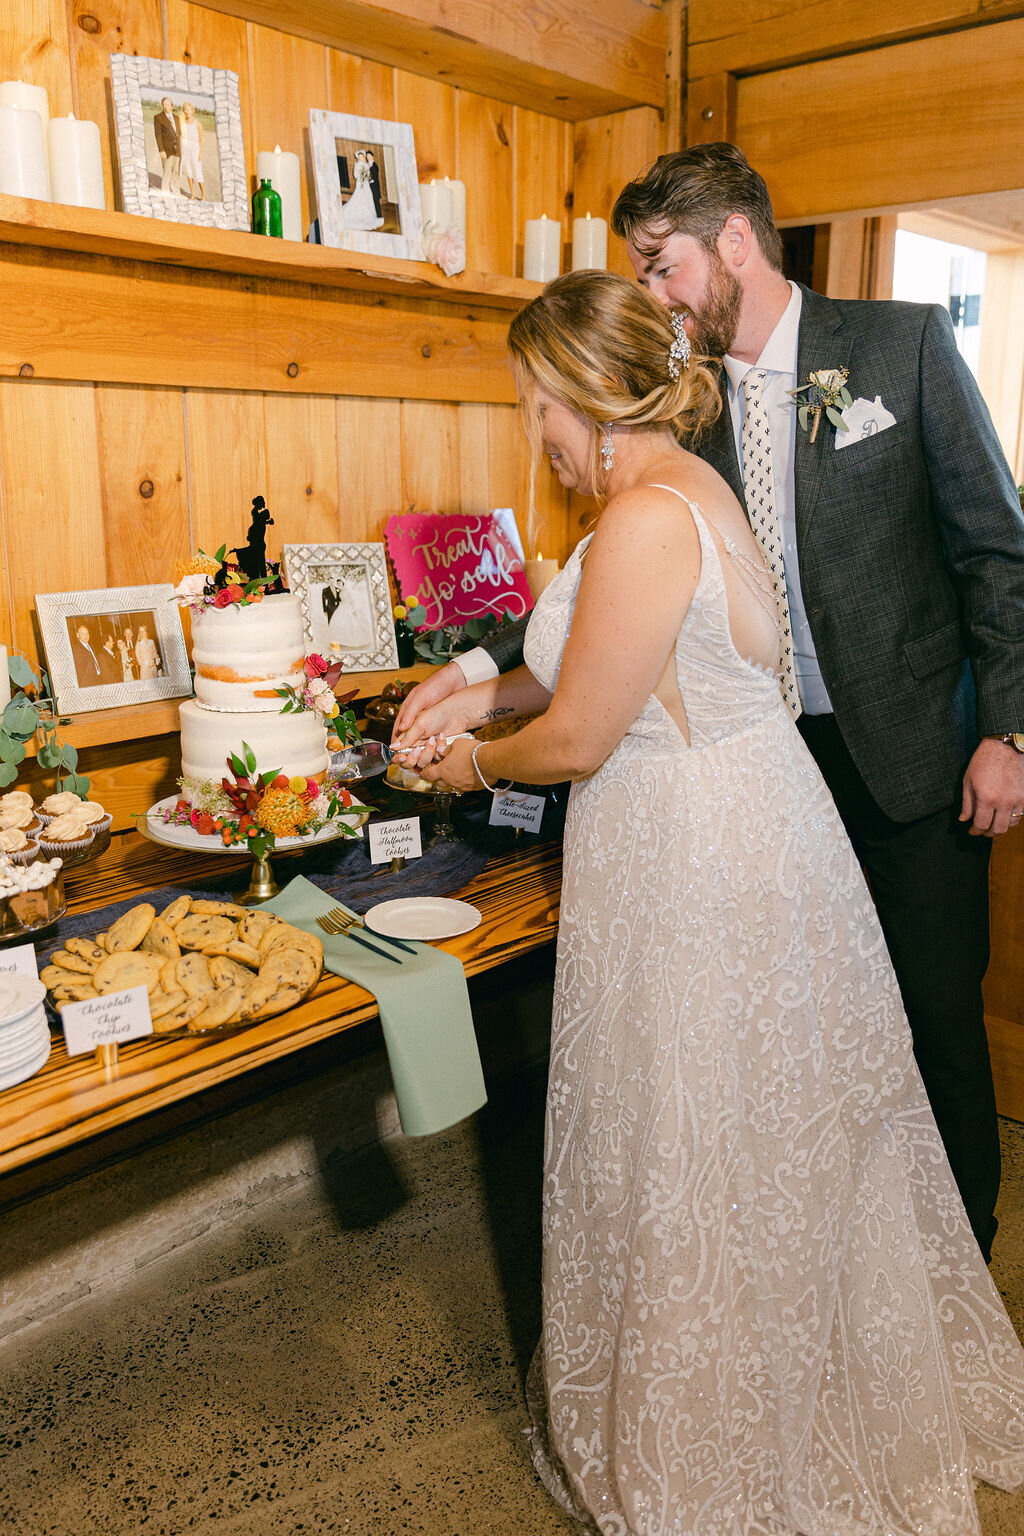 quiet-cake-cutting-wedding-ideas